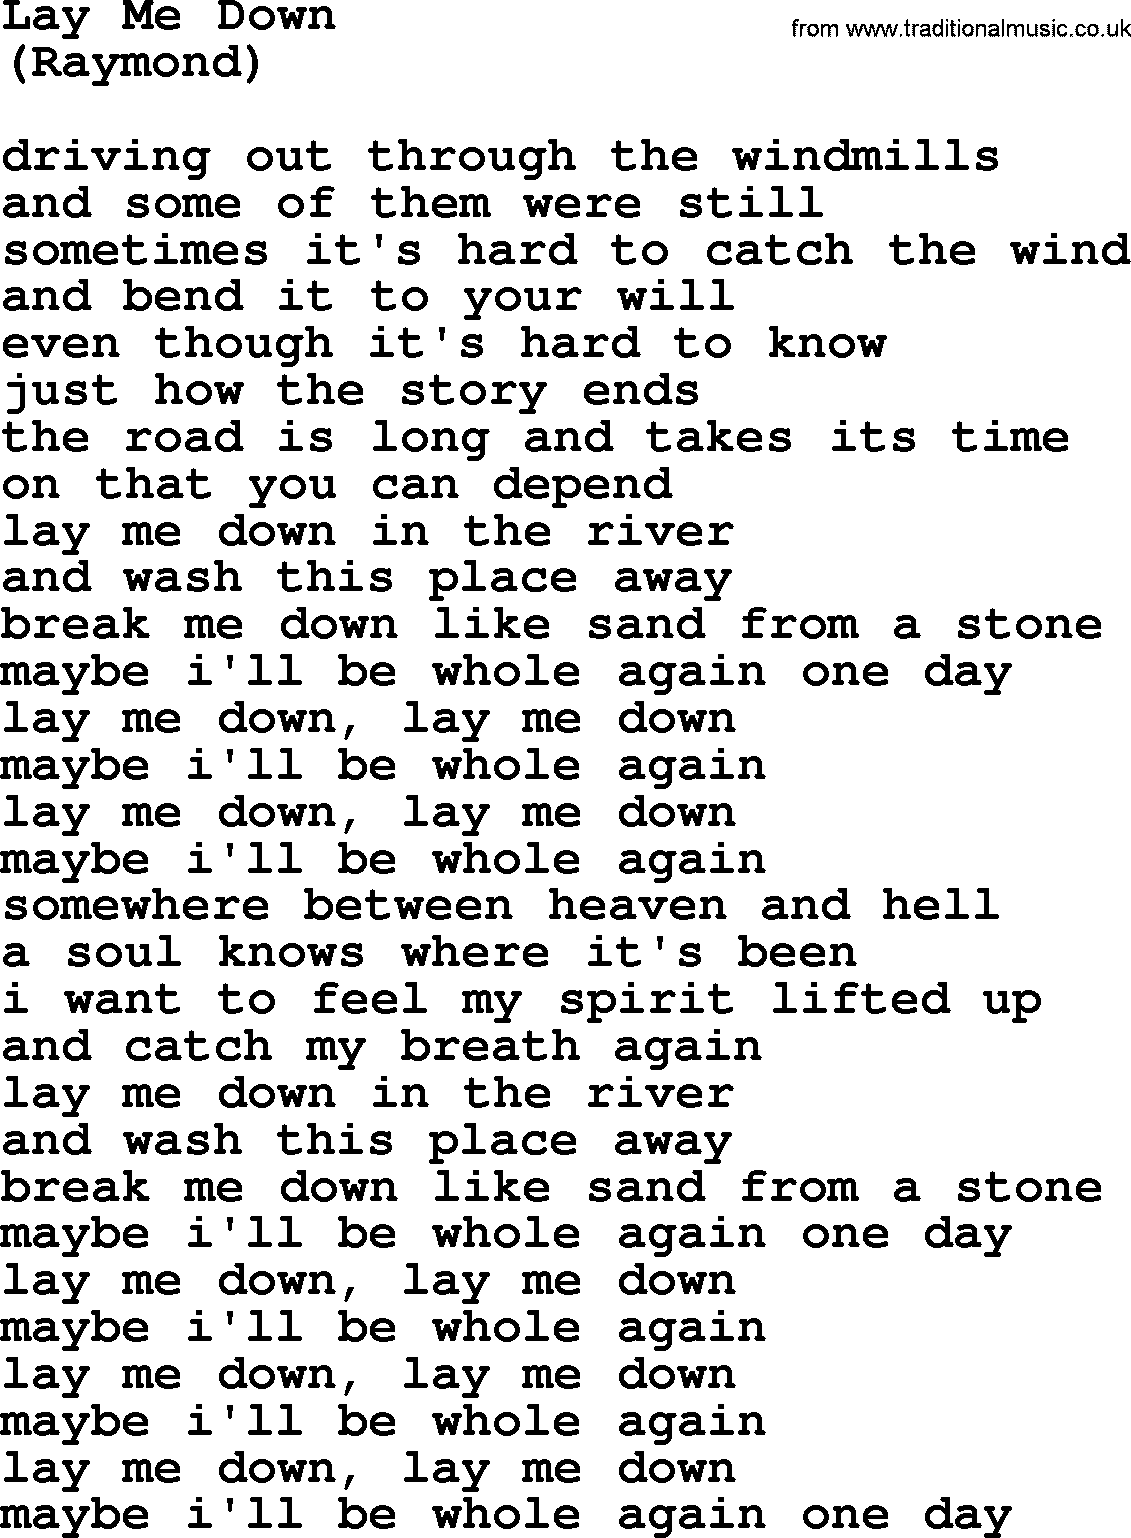 The Byrds song Lay Me Down, lyrics